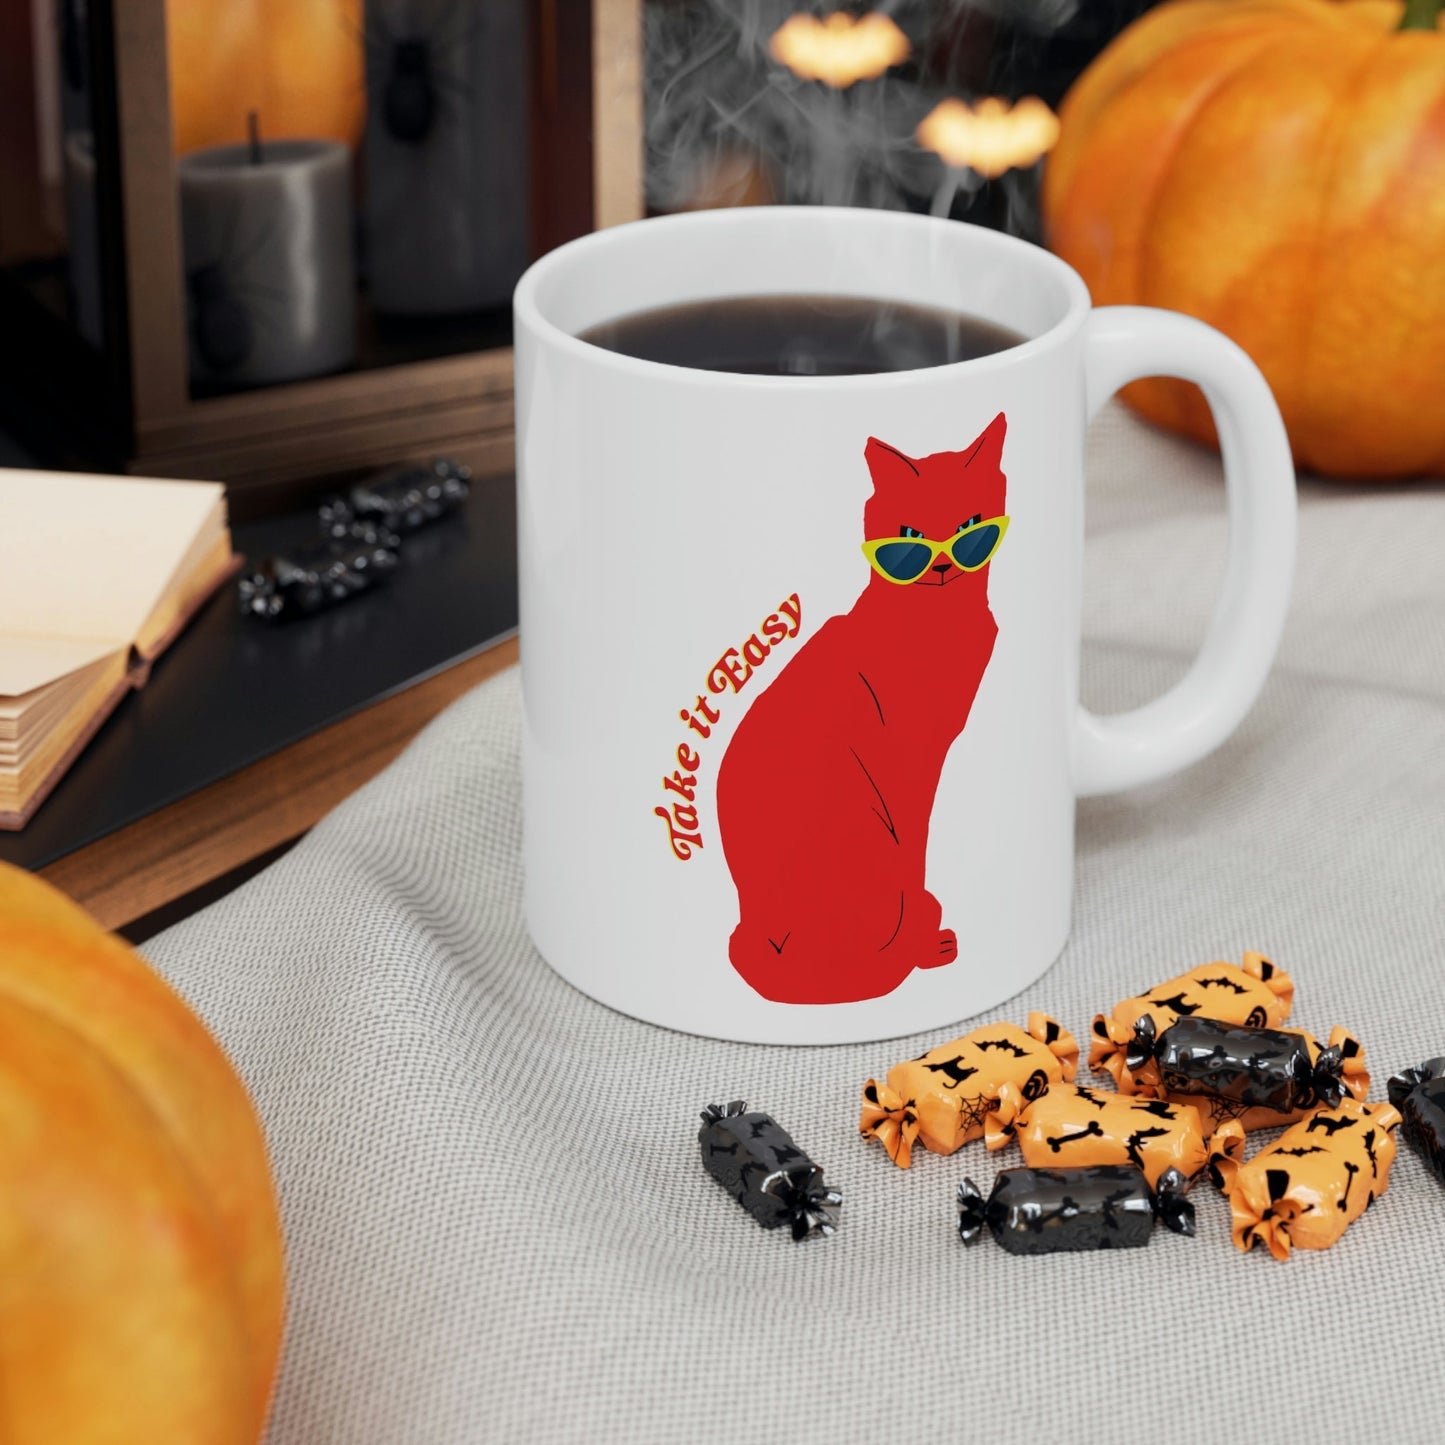 Take It Easy Red Cat Watching With Glasses Ceramic Mug 11oz Ichaku [Perfect Gifts Selection]